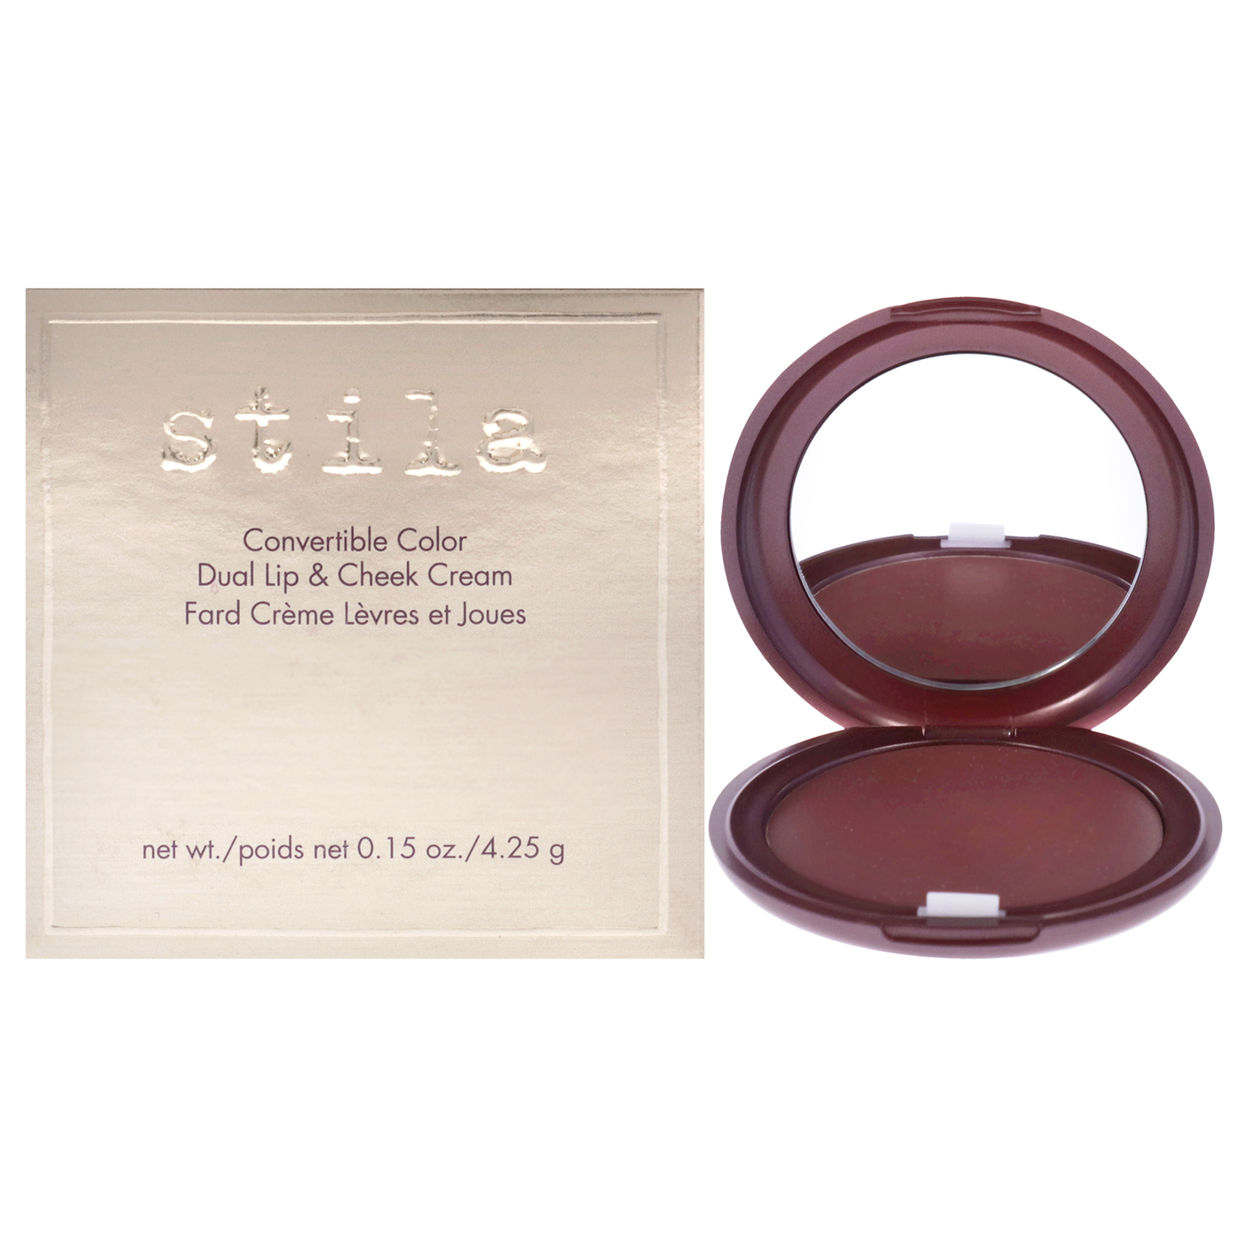 Stila Convertible Color Dual Lip And Cheek Cream - Magnolia Makeup 0.15 Oz